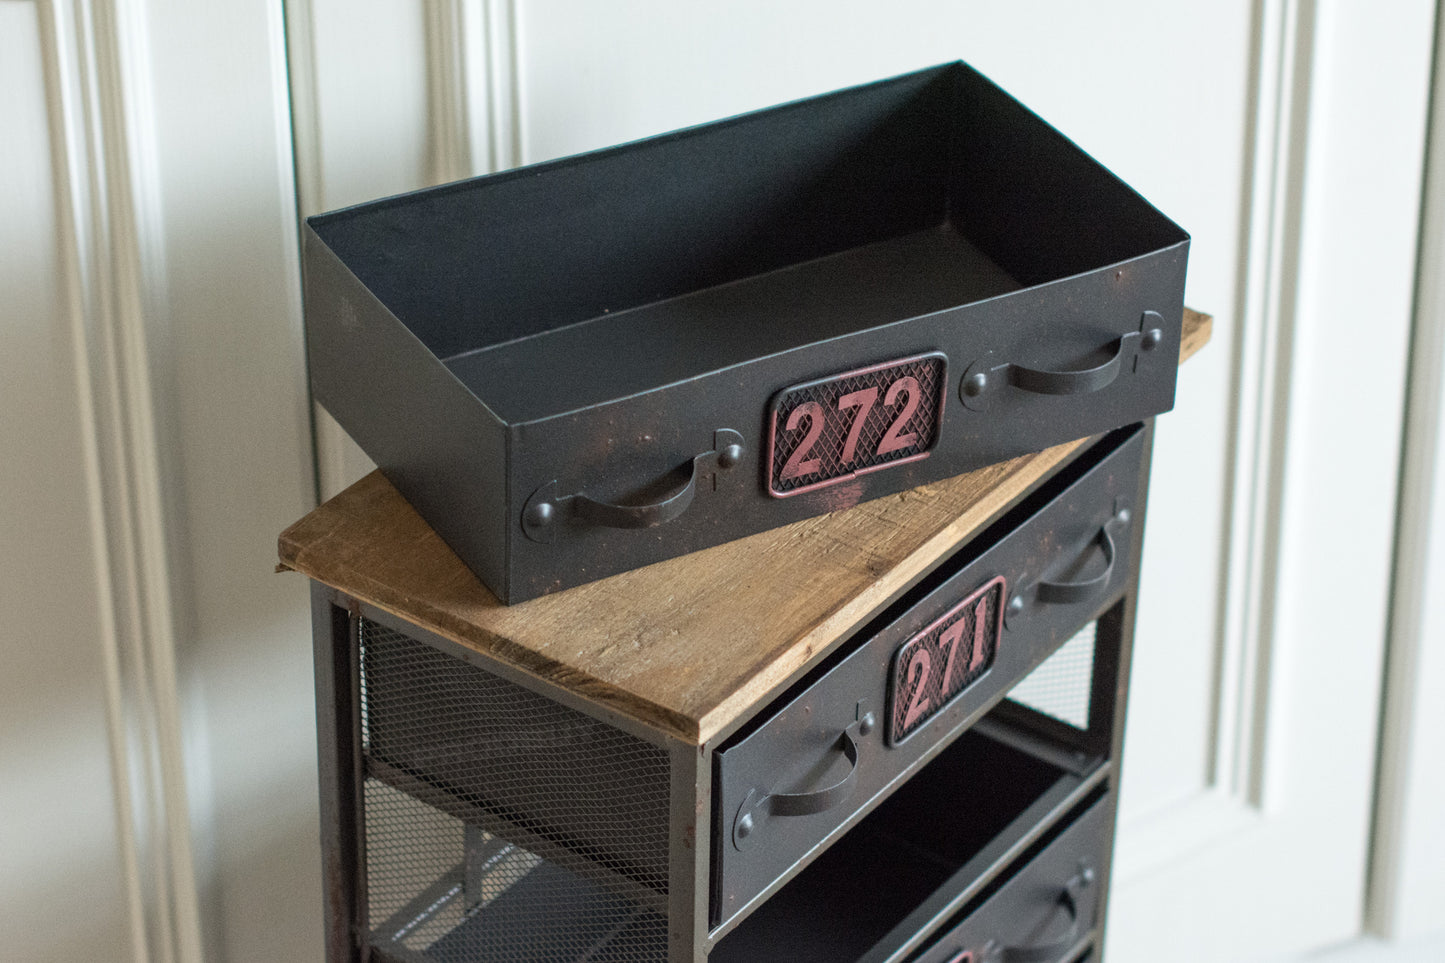 Industrial Style Black Metal 5 Drawer Cabinet